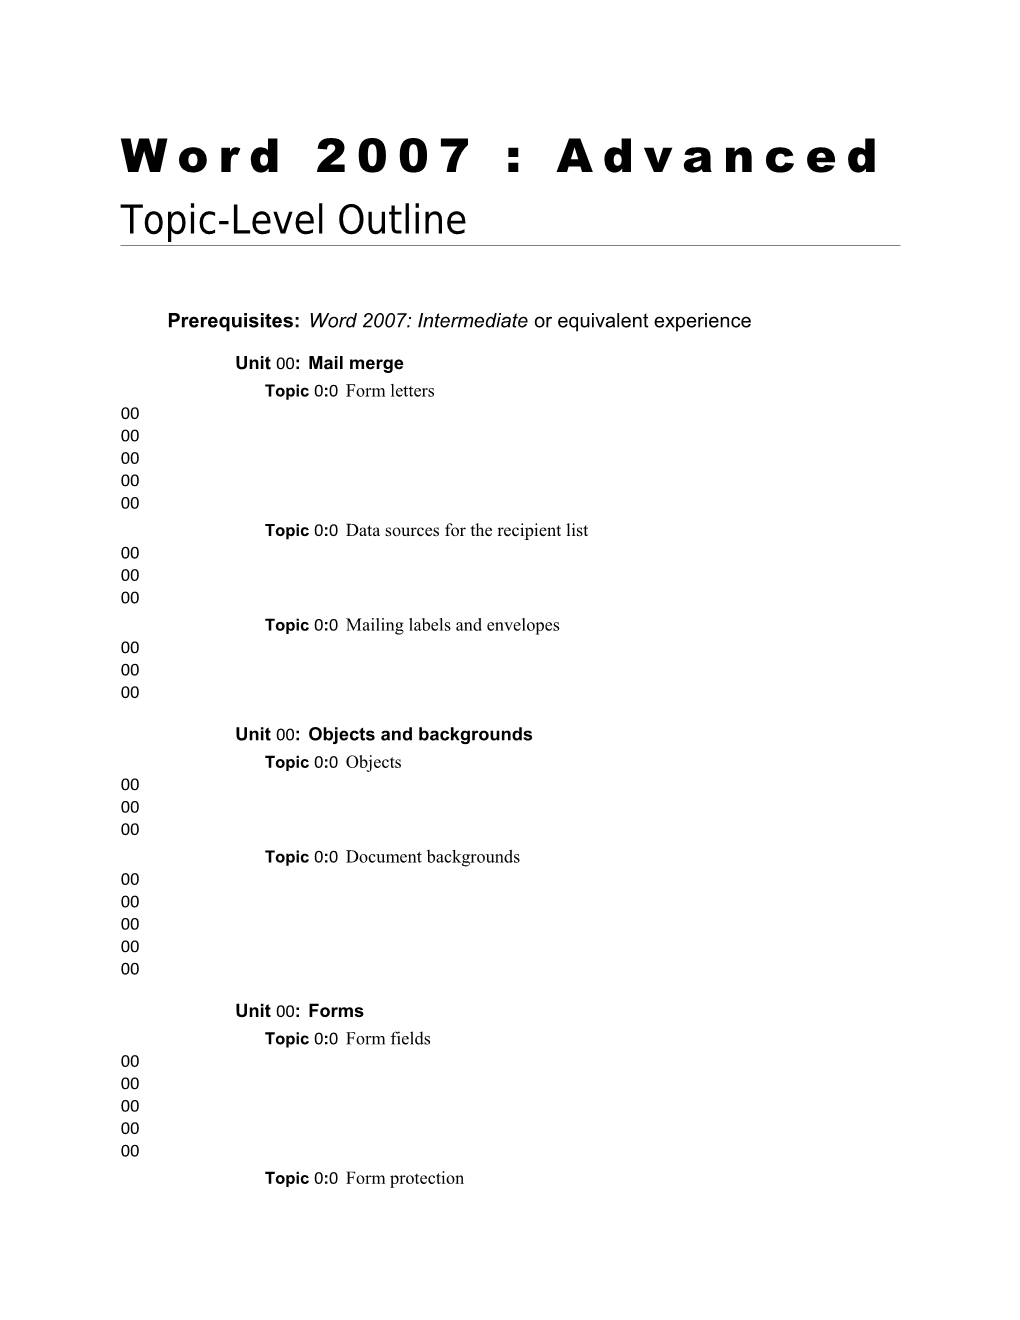 Prerequisites:Word 2007: Intermediate Or Equivalent Experience